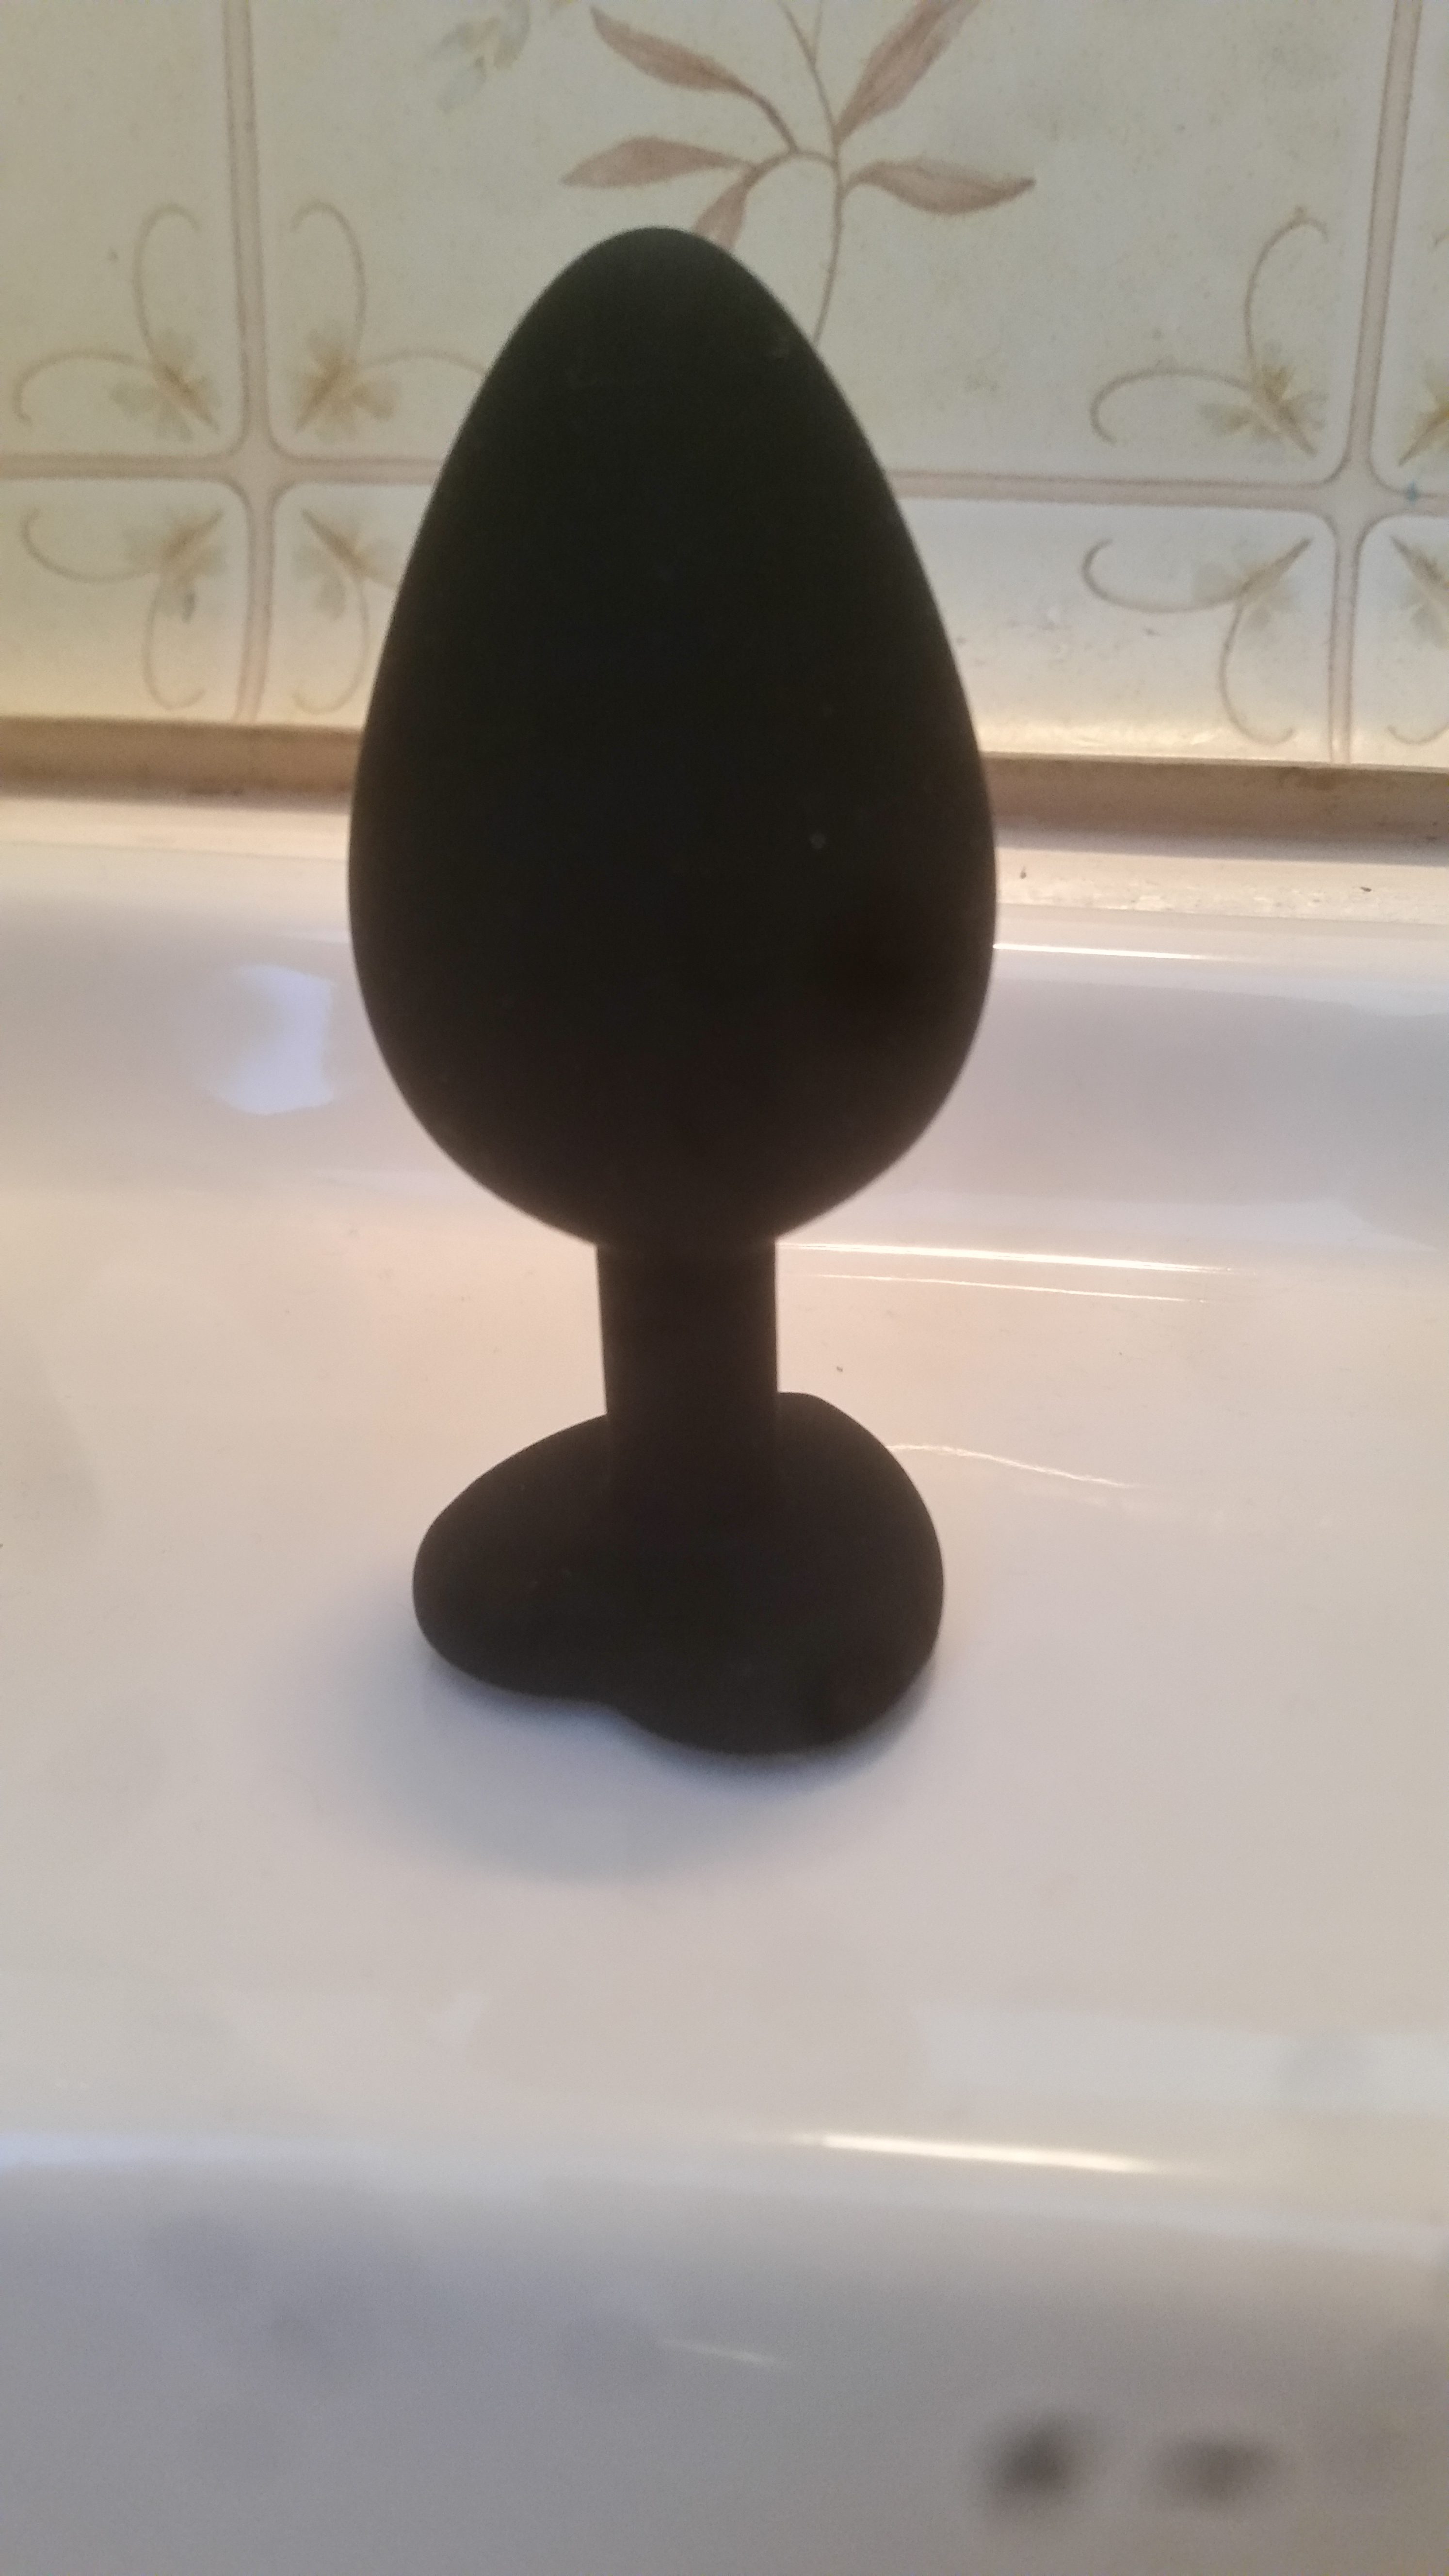 The Temptasia Bling Bling butt plug on a bathroom sink.